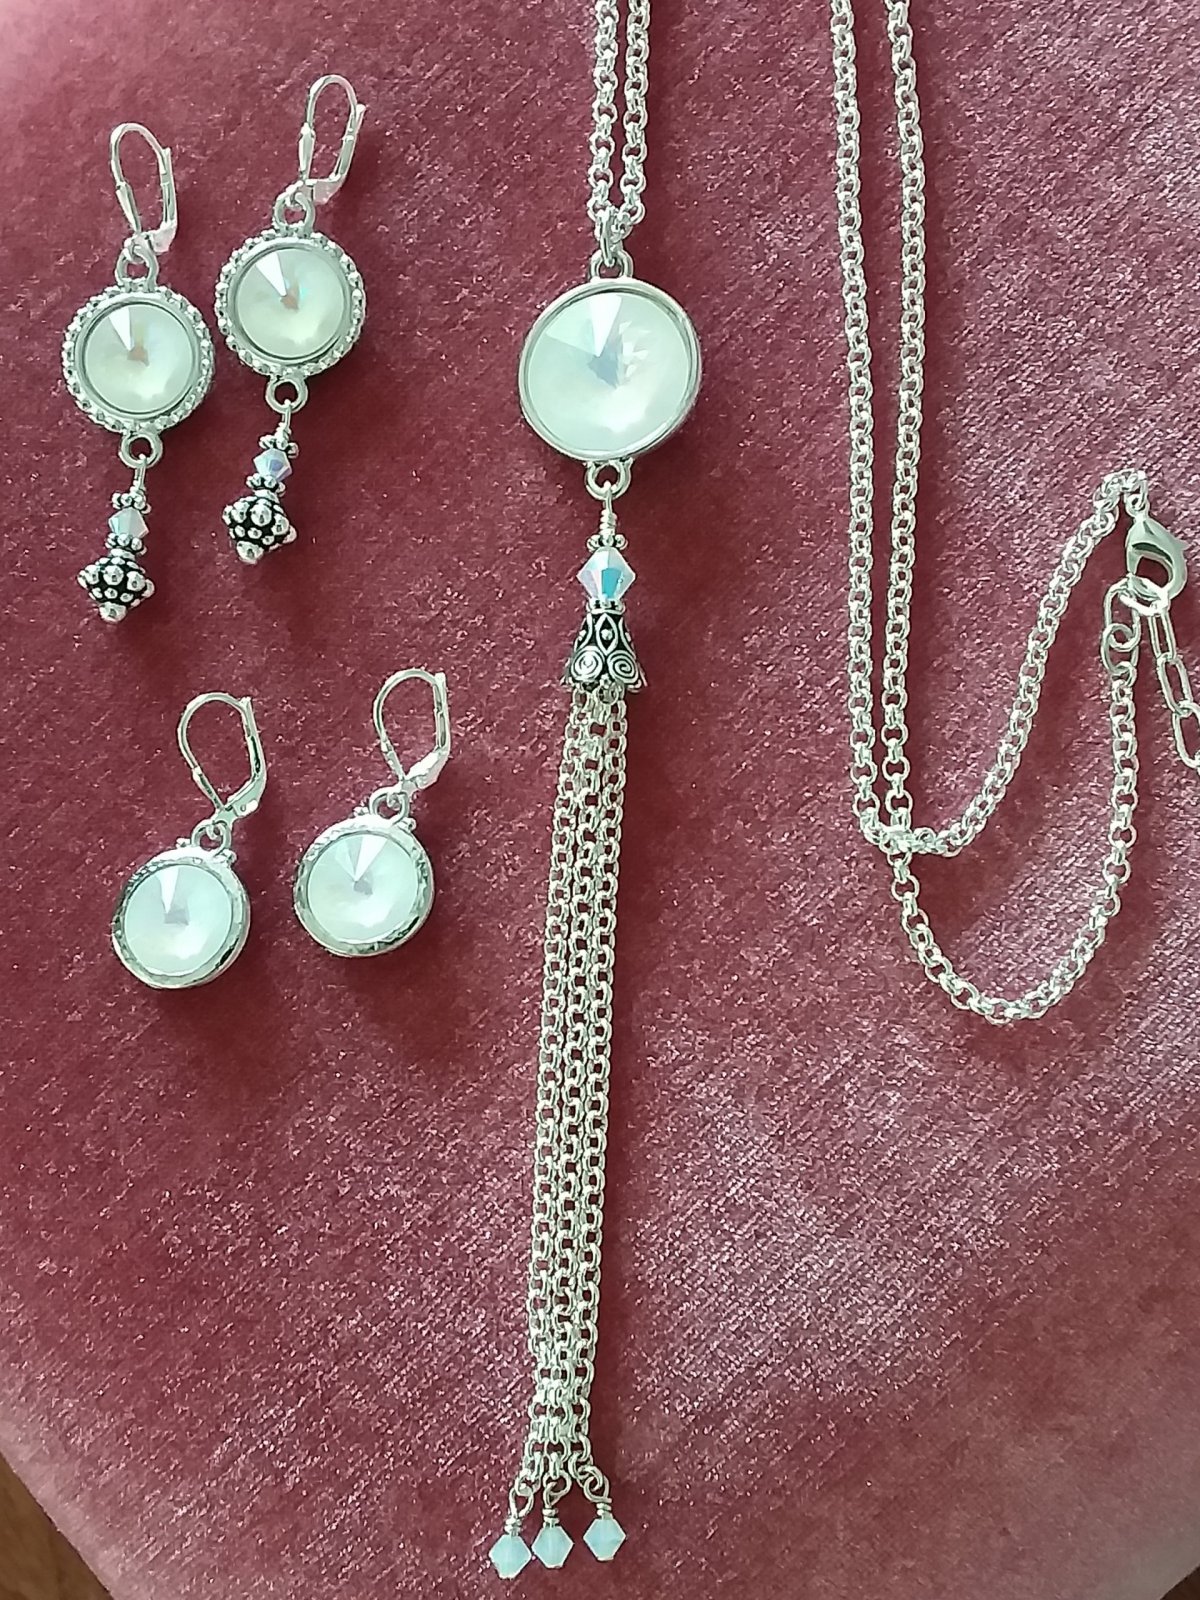 https://lorirae.com/wp-content/uploads/2020/05/ultra-white-26in-long-tassel-necklace-scaled-e1590690152312.jpg